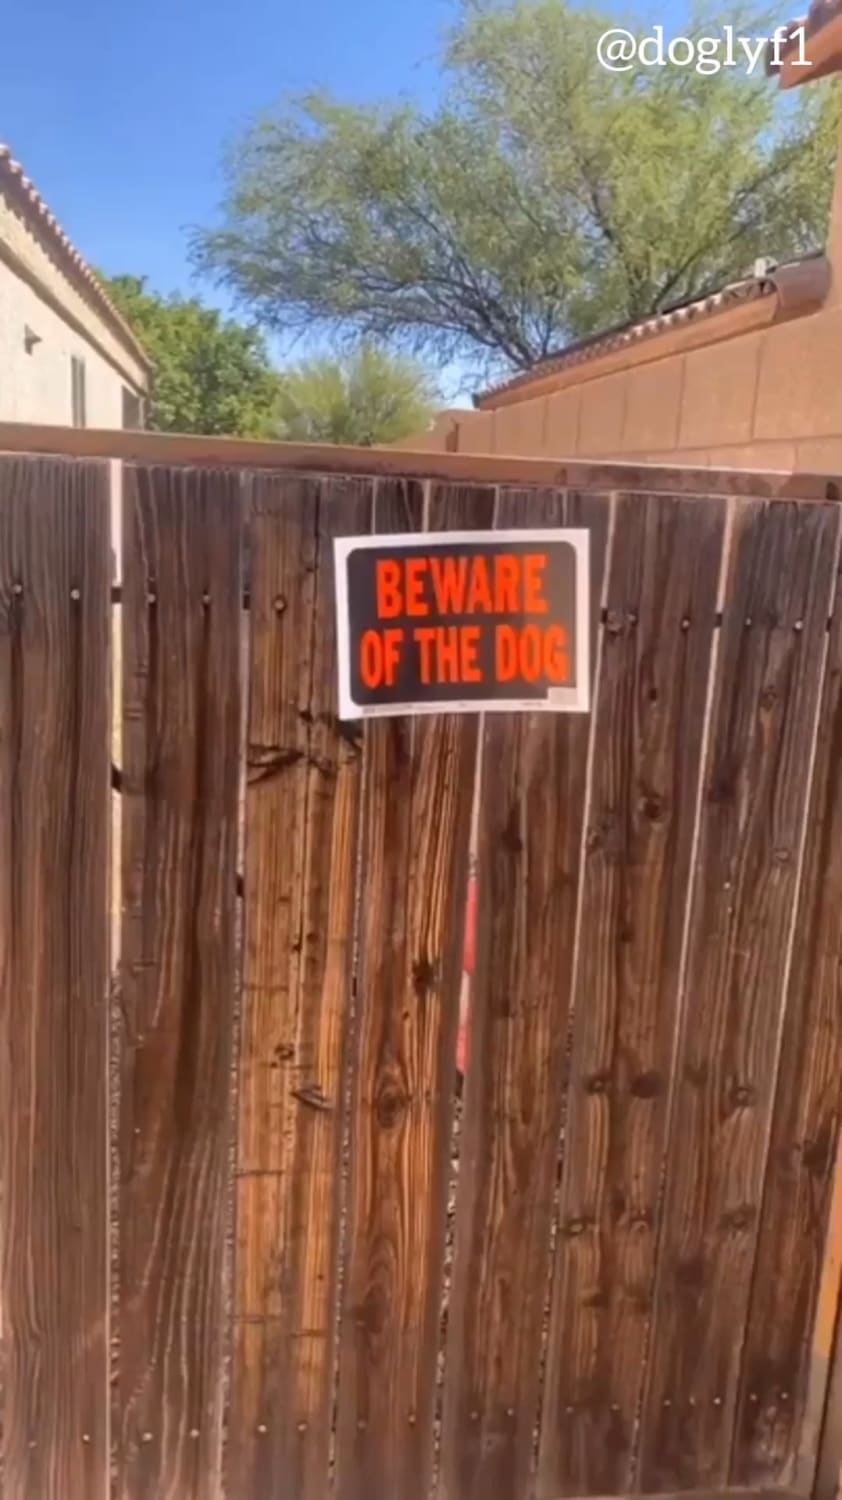 Beware of dogs.